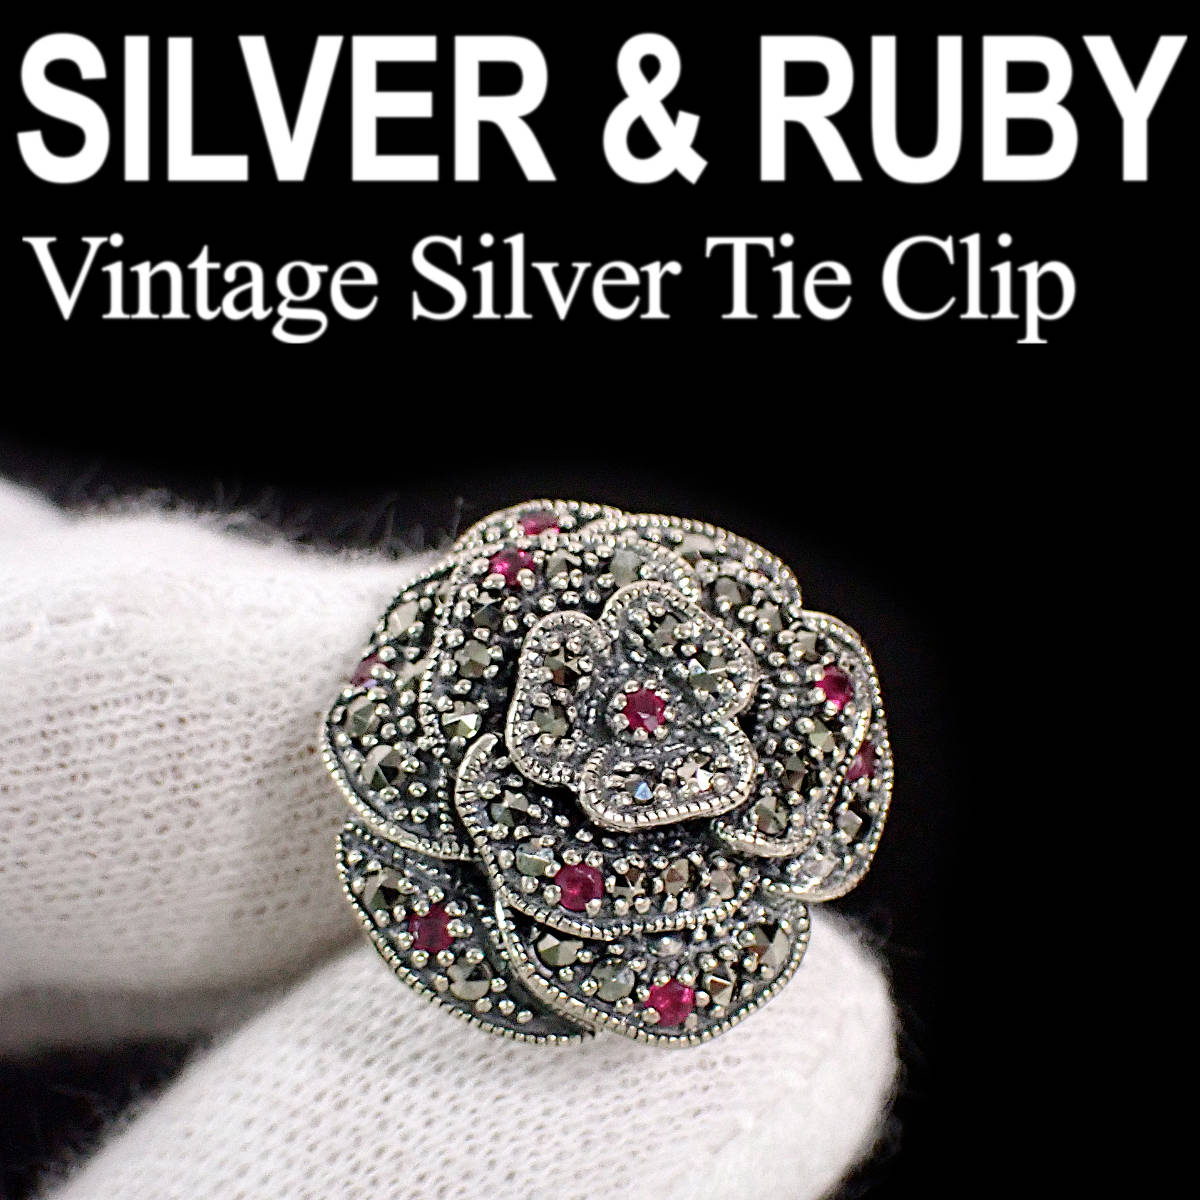 SILVER & RUBY ビンテージ 10Pルビー シルバー タイクリップ Vintage Silver TaiClip